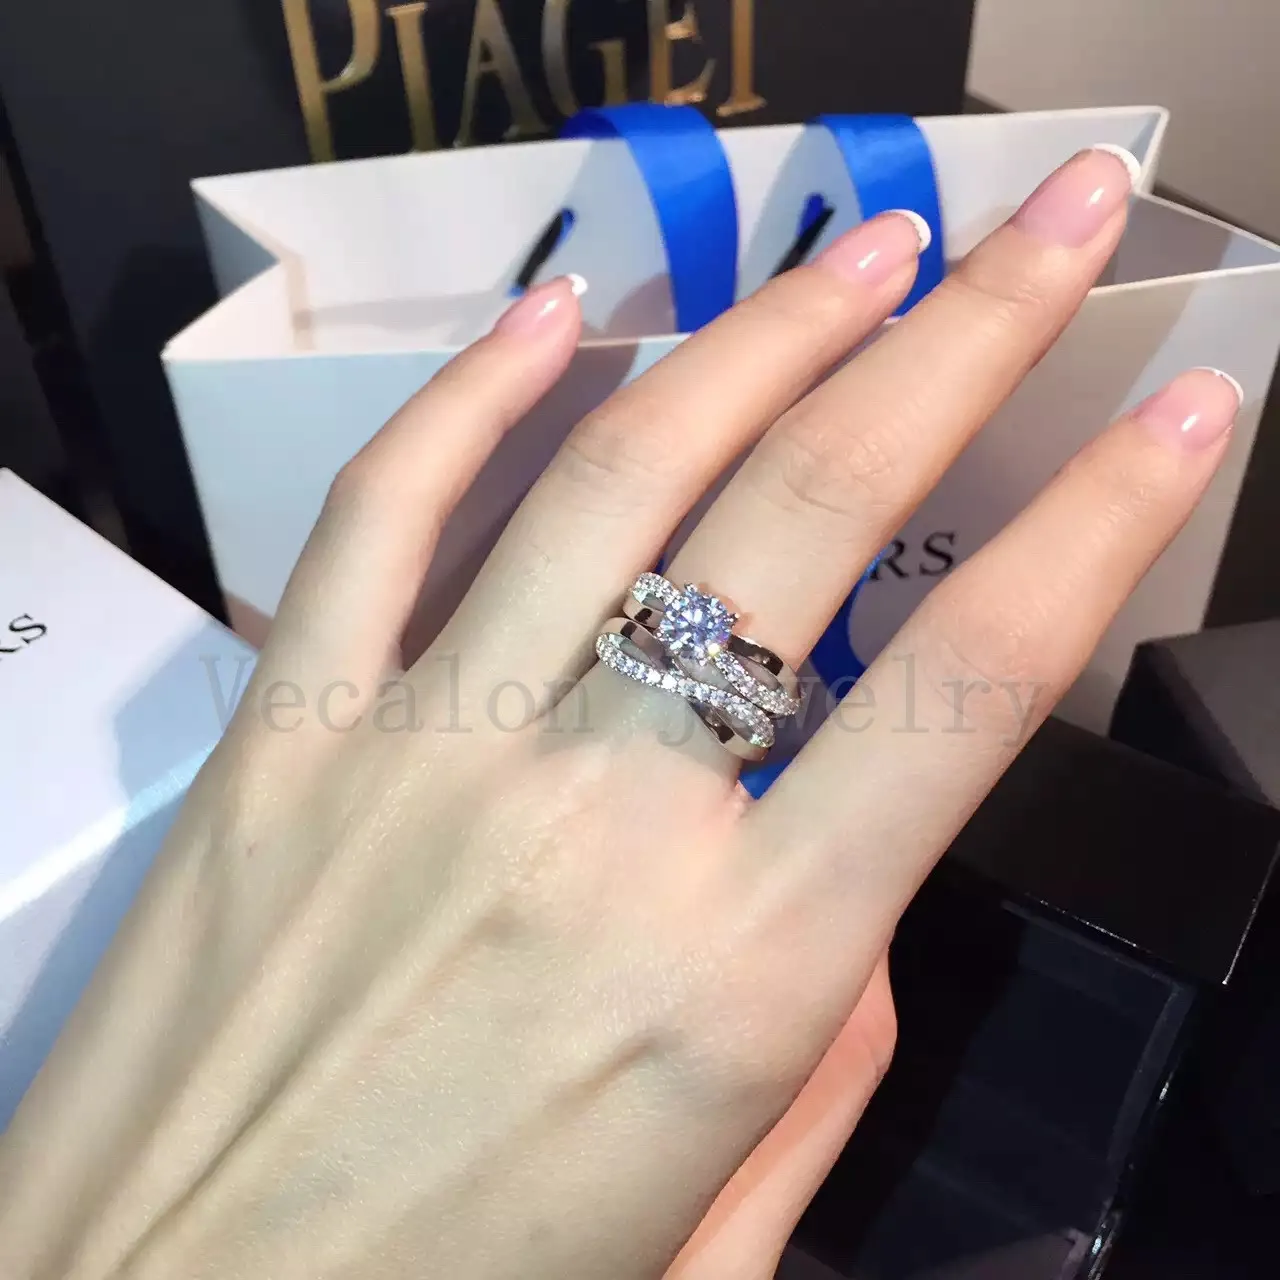 Vecalon 2016 Fashion Engagement Trouwring Set voor Vrouwen 1CT Simulated Diamond CZ 925 Sterling Zilveren Vrouwelijke Band Ring R200